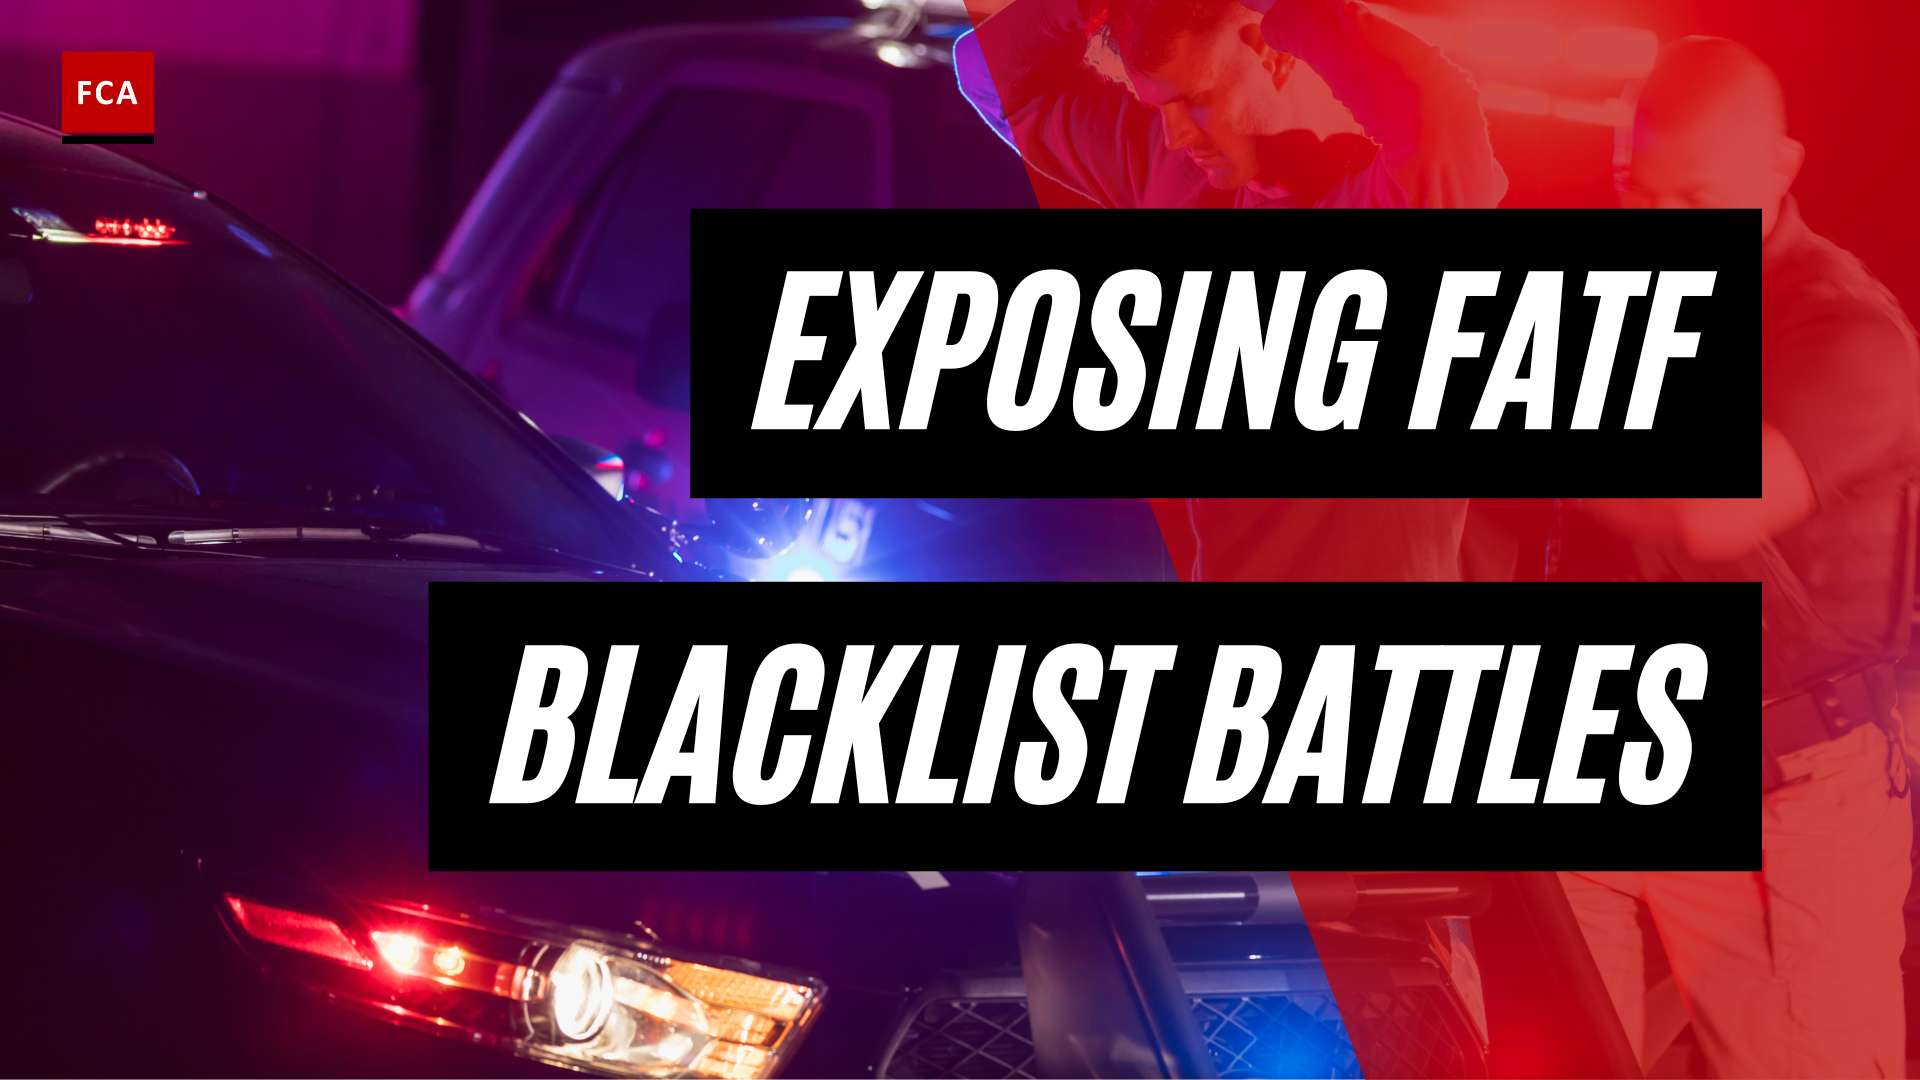 Fatf Blacklist: Exposing The Global Battle Against Financial Wrongdoings